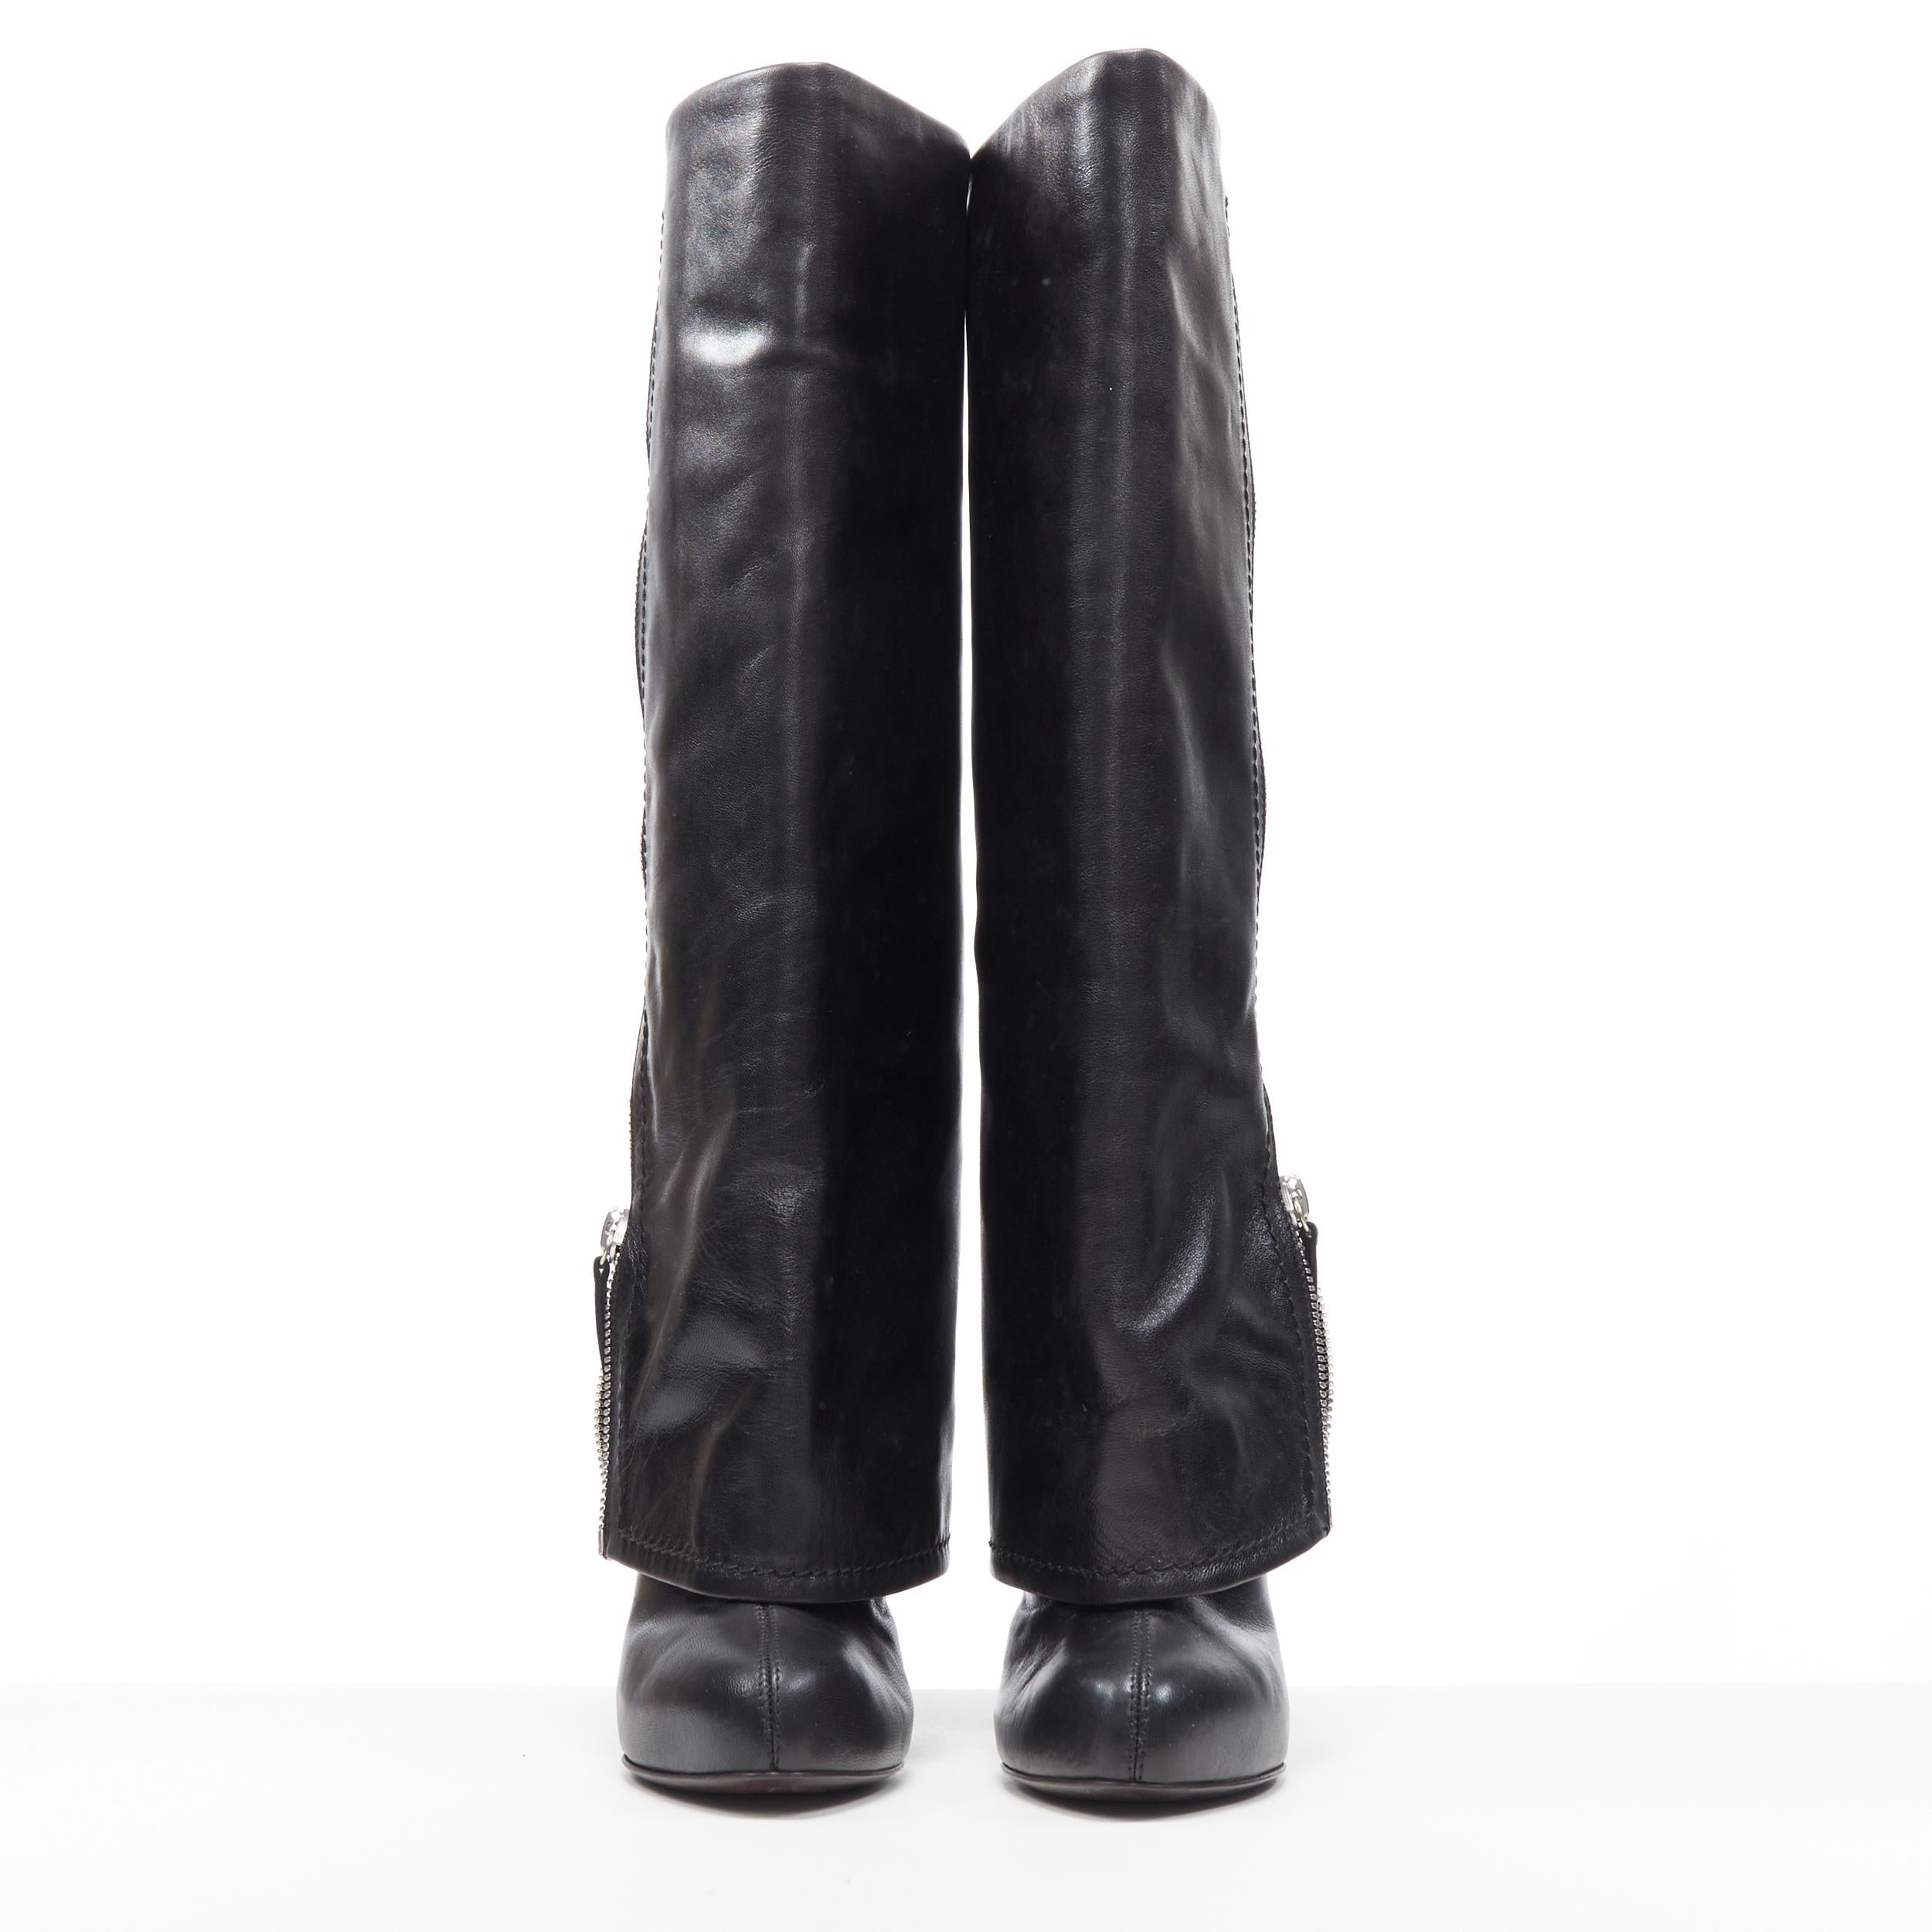 Black new GIUSEPPE ZANOTTI black leather zipper foldover pant high heel boot EU36